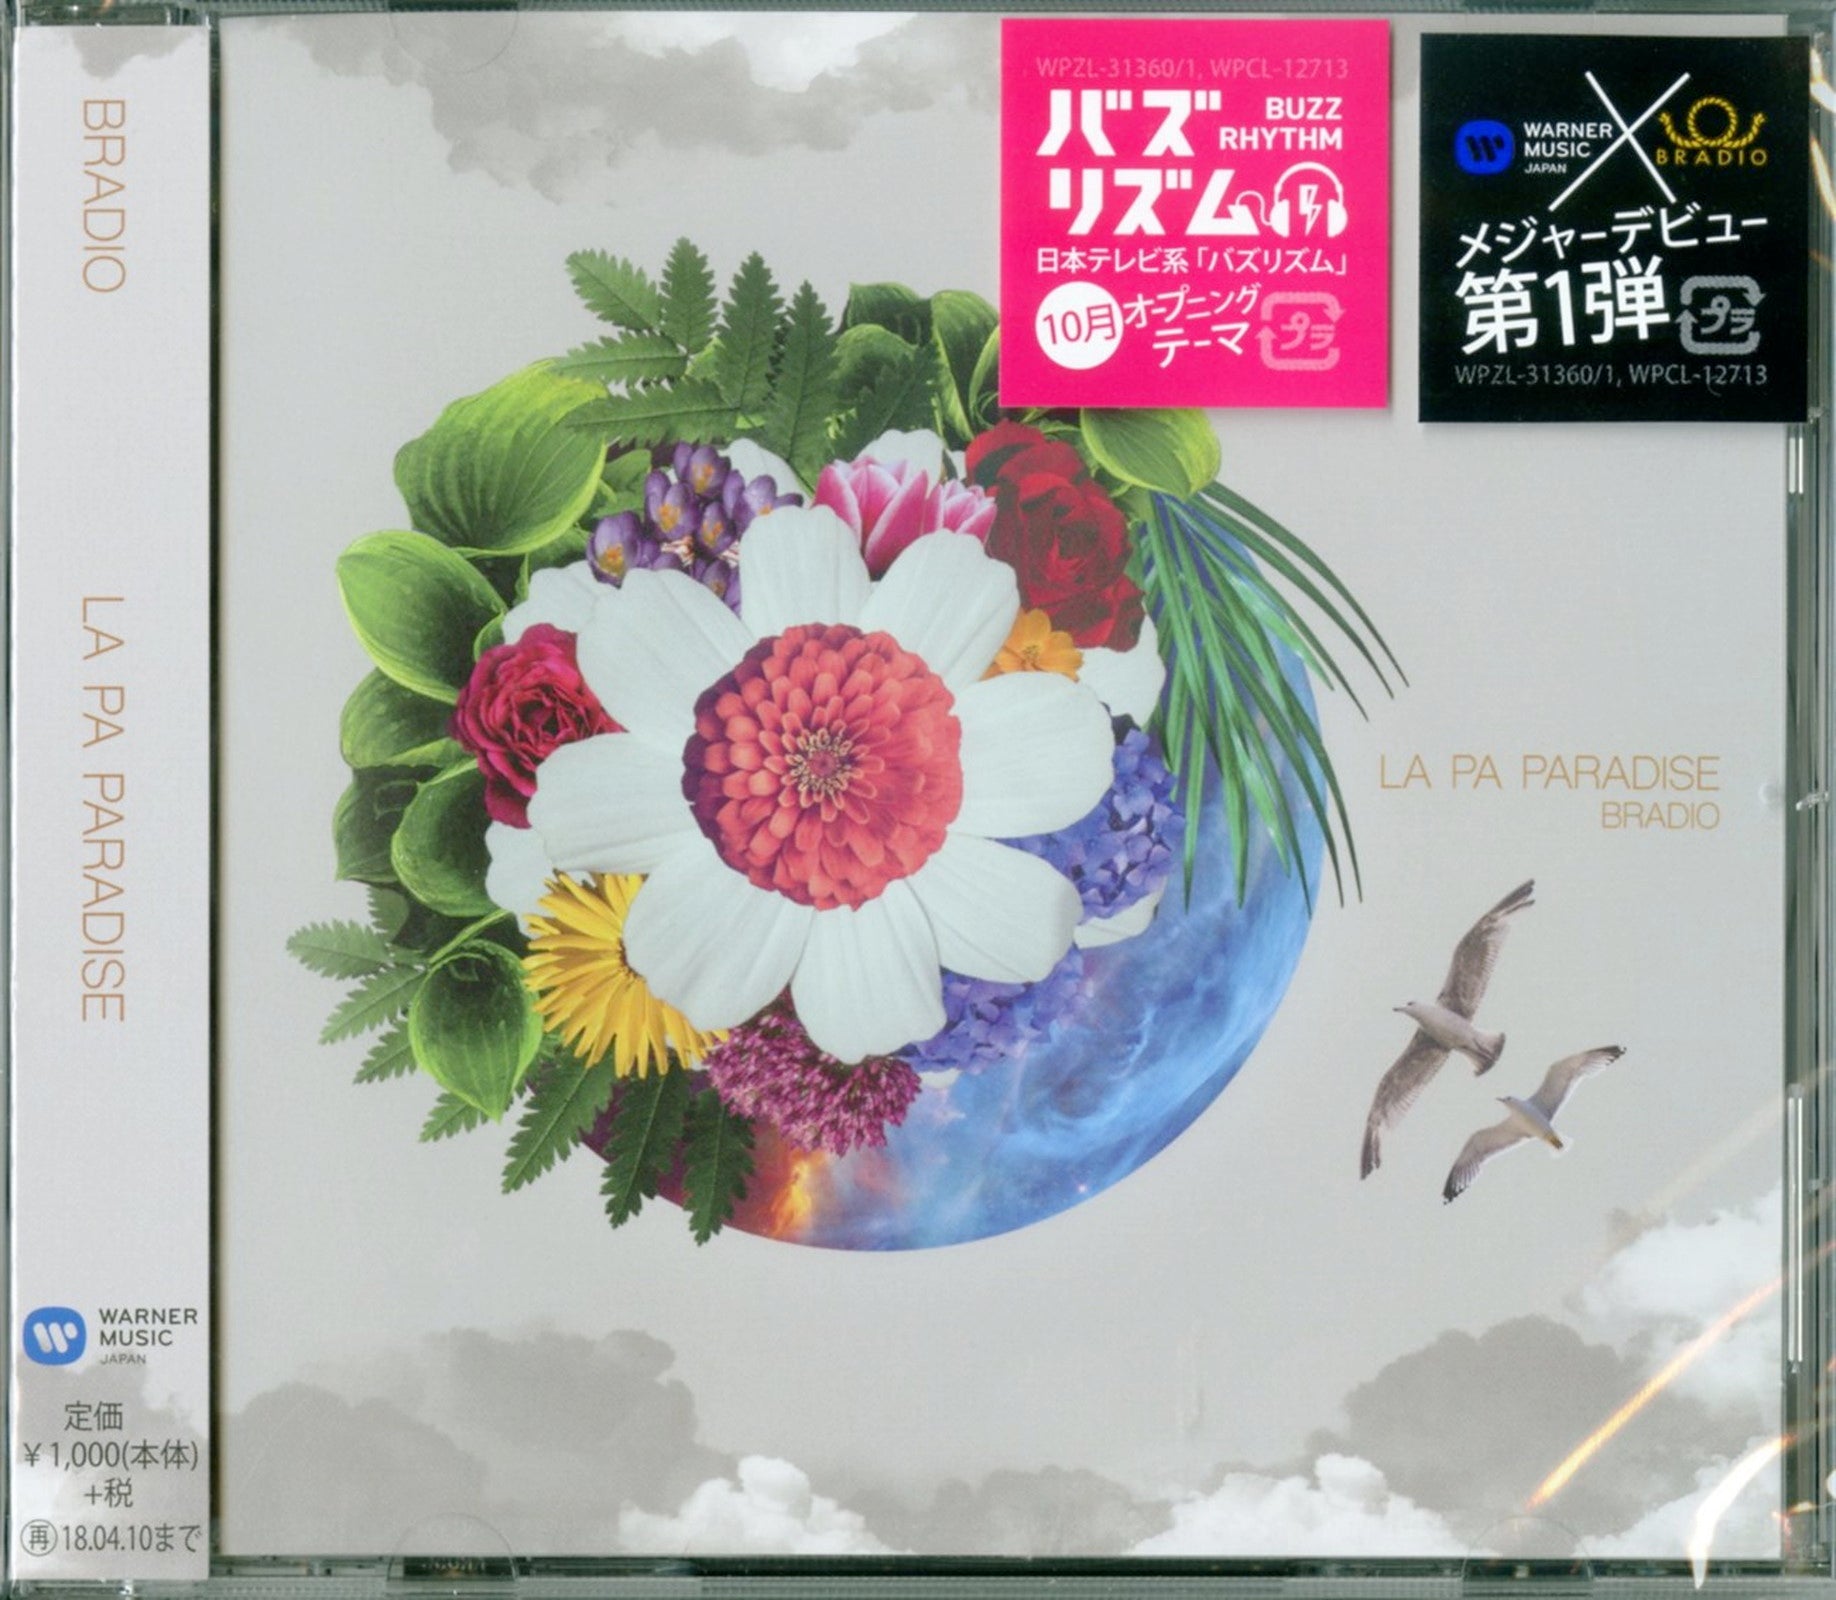 Bradio - La Pa Paradise - Japan CD+DVD – CDs Vinyl Japan Store 